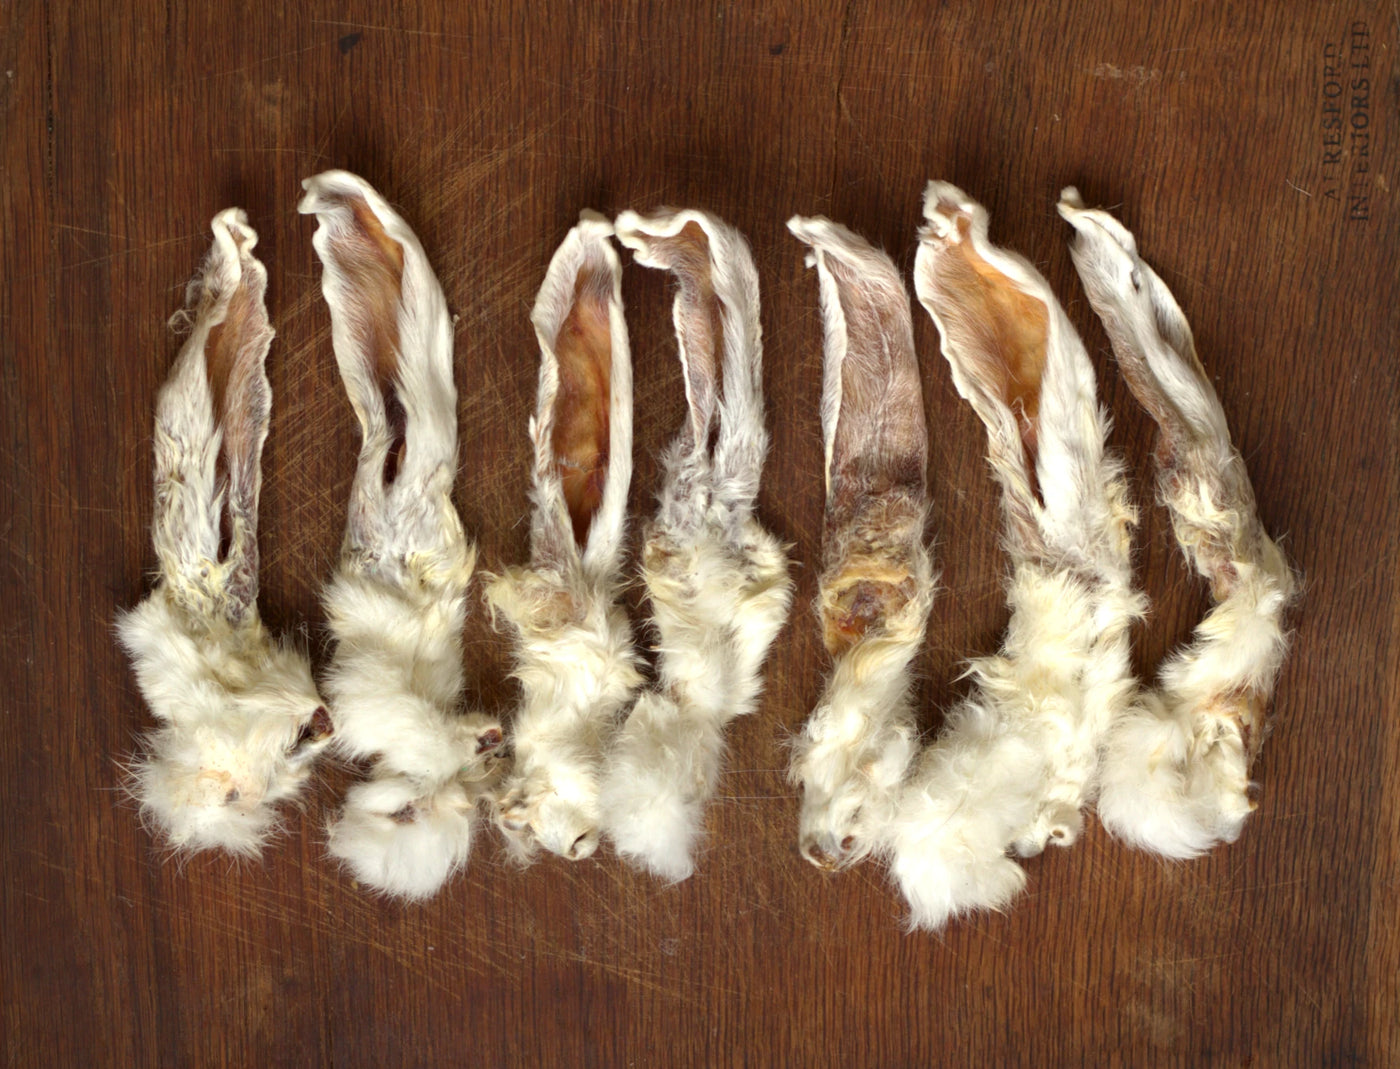 Benyfit Natural Rabbit Ears with Fur